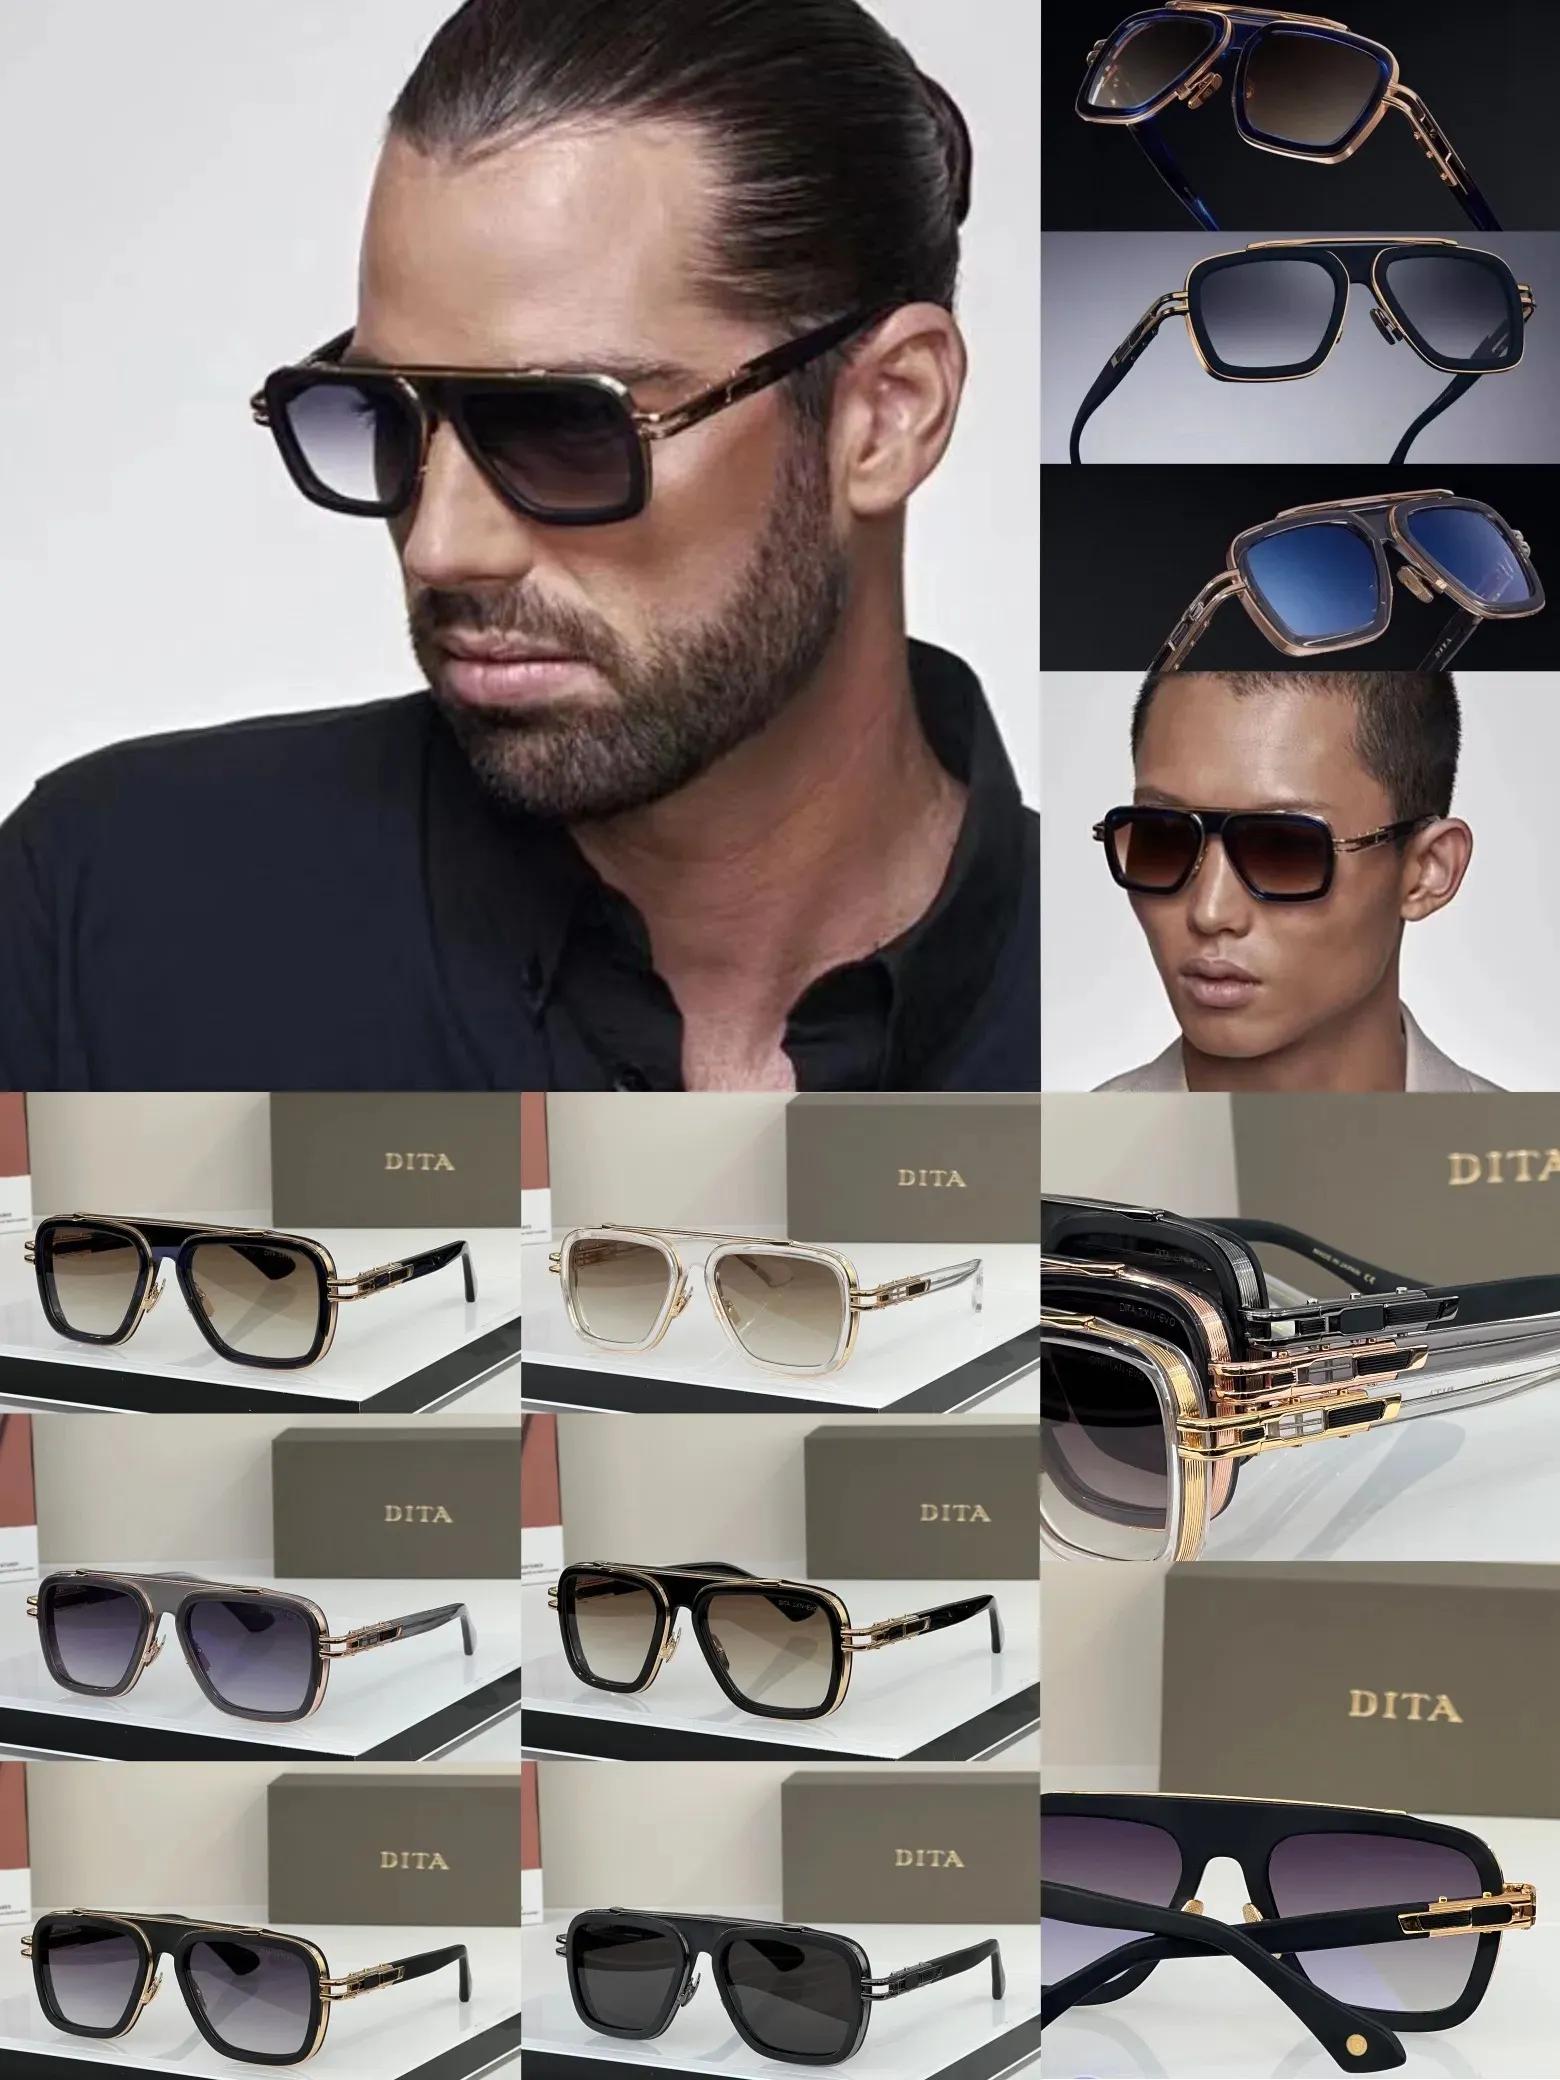 DITA LXN-EVO Sunglasses For Men Women Retro Eyeglasses UV400 Outdoor Shades Acetate Frame Fashion Classic Lady Sun glasses Mirrors With Box DTS403 SIZE54-19